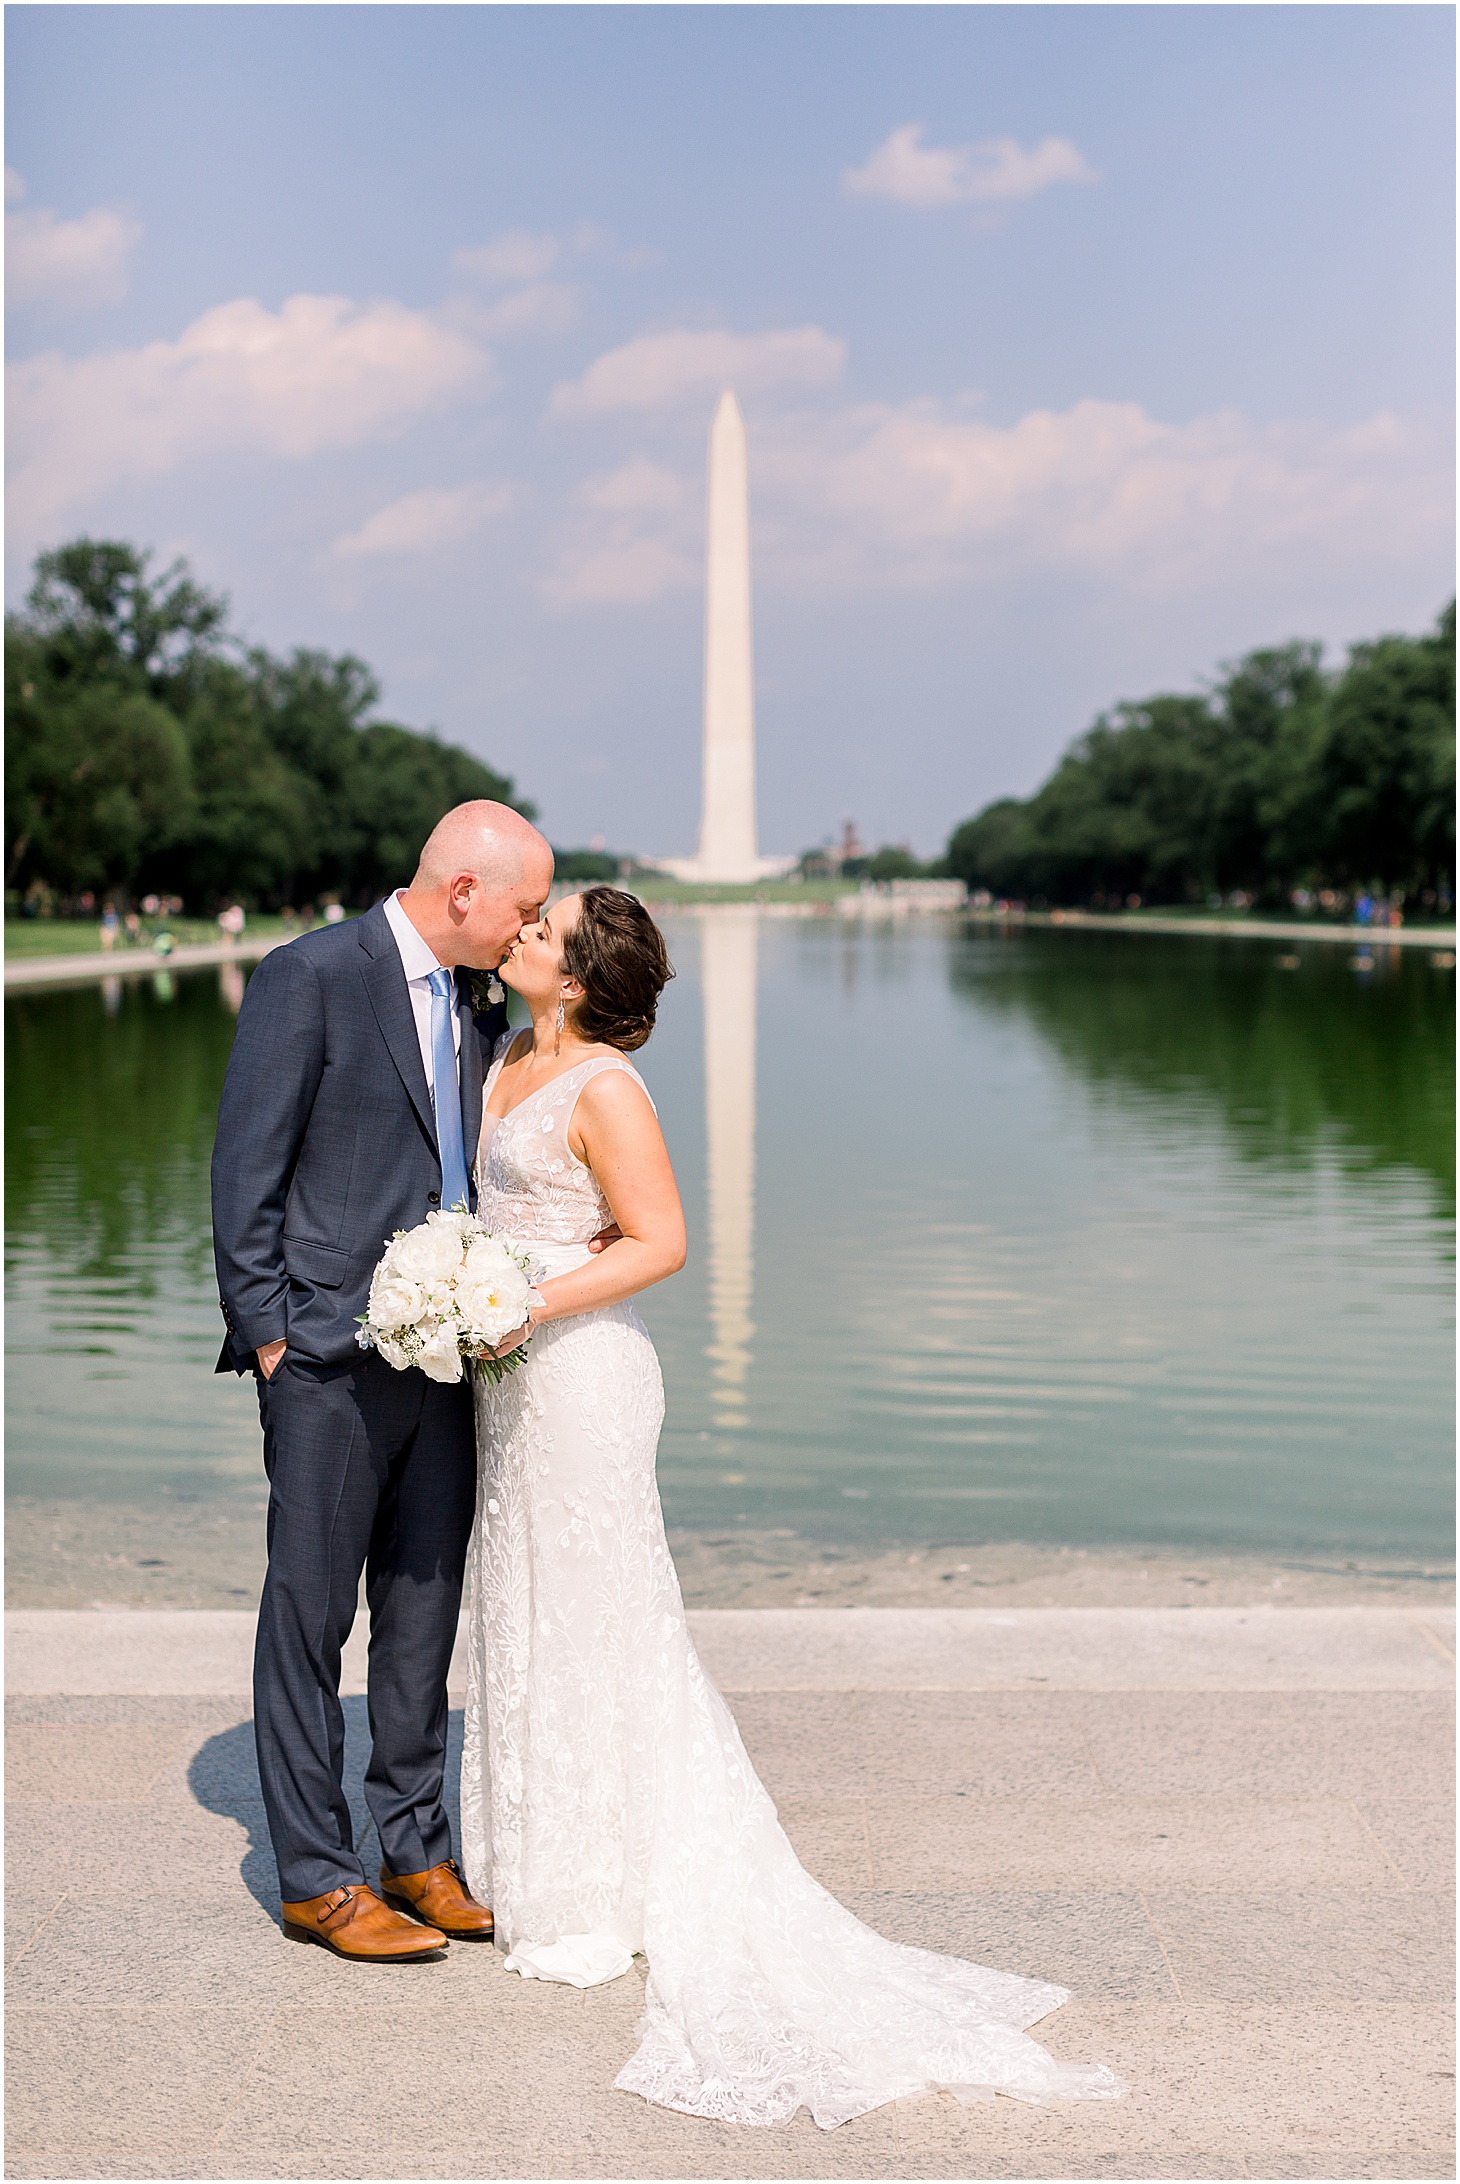 Wedding Portraits at Lincoln Memorial Reflecting Pool in DC, Romantic Spring Wedding at Dumbarton House Gardens, Sarah Bradshaw Photography